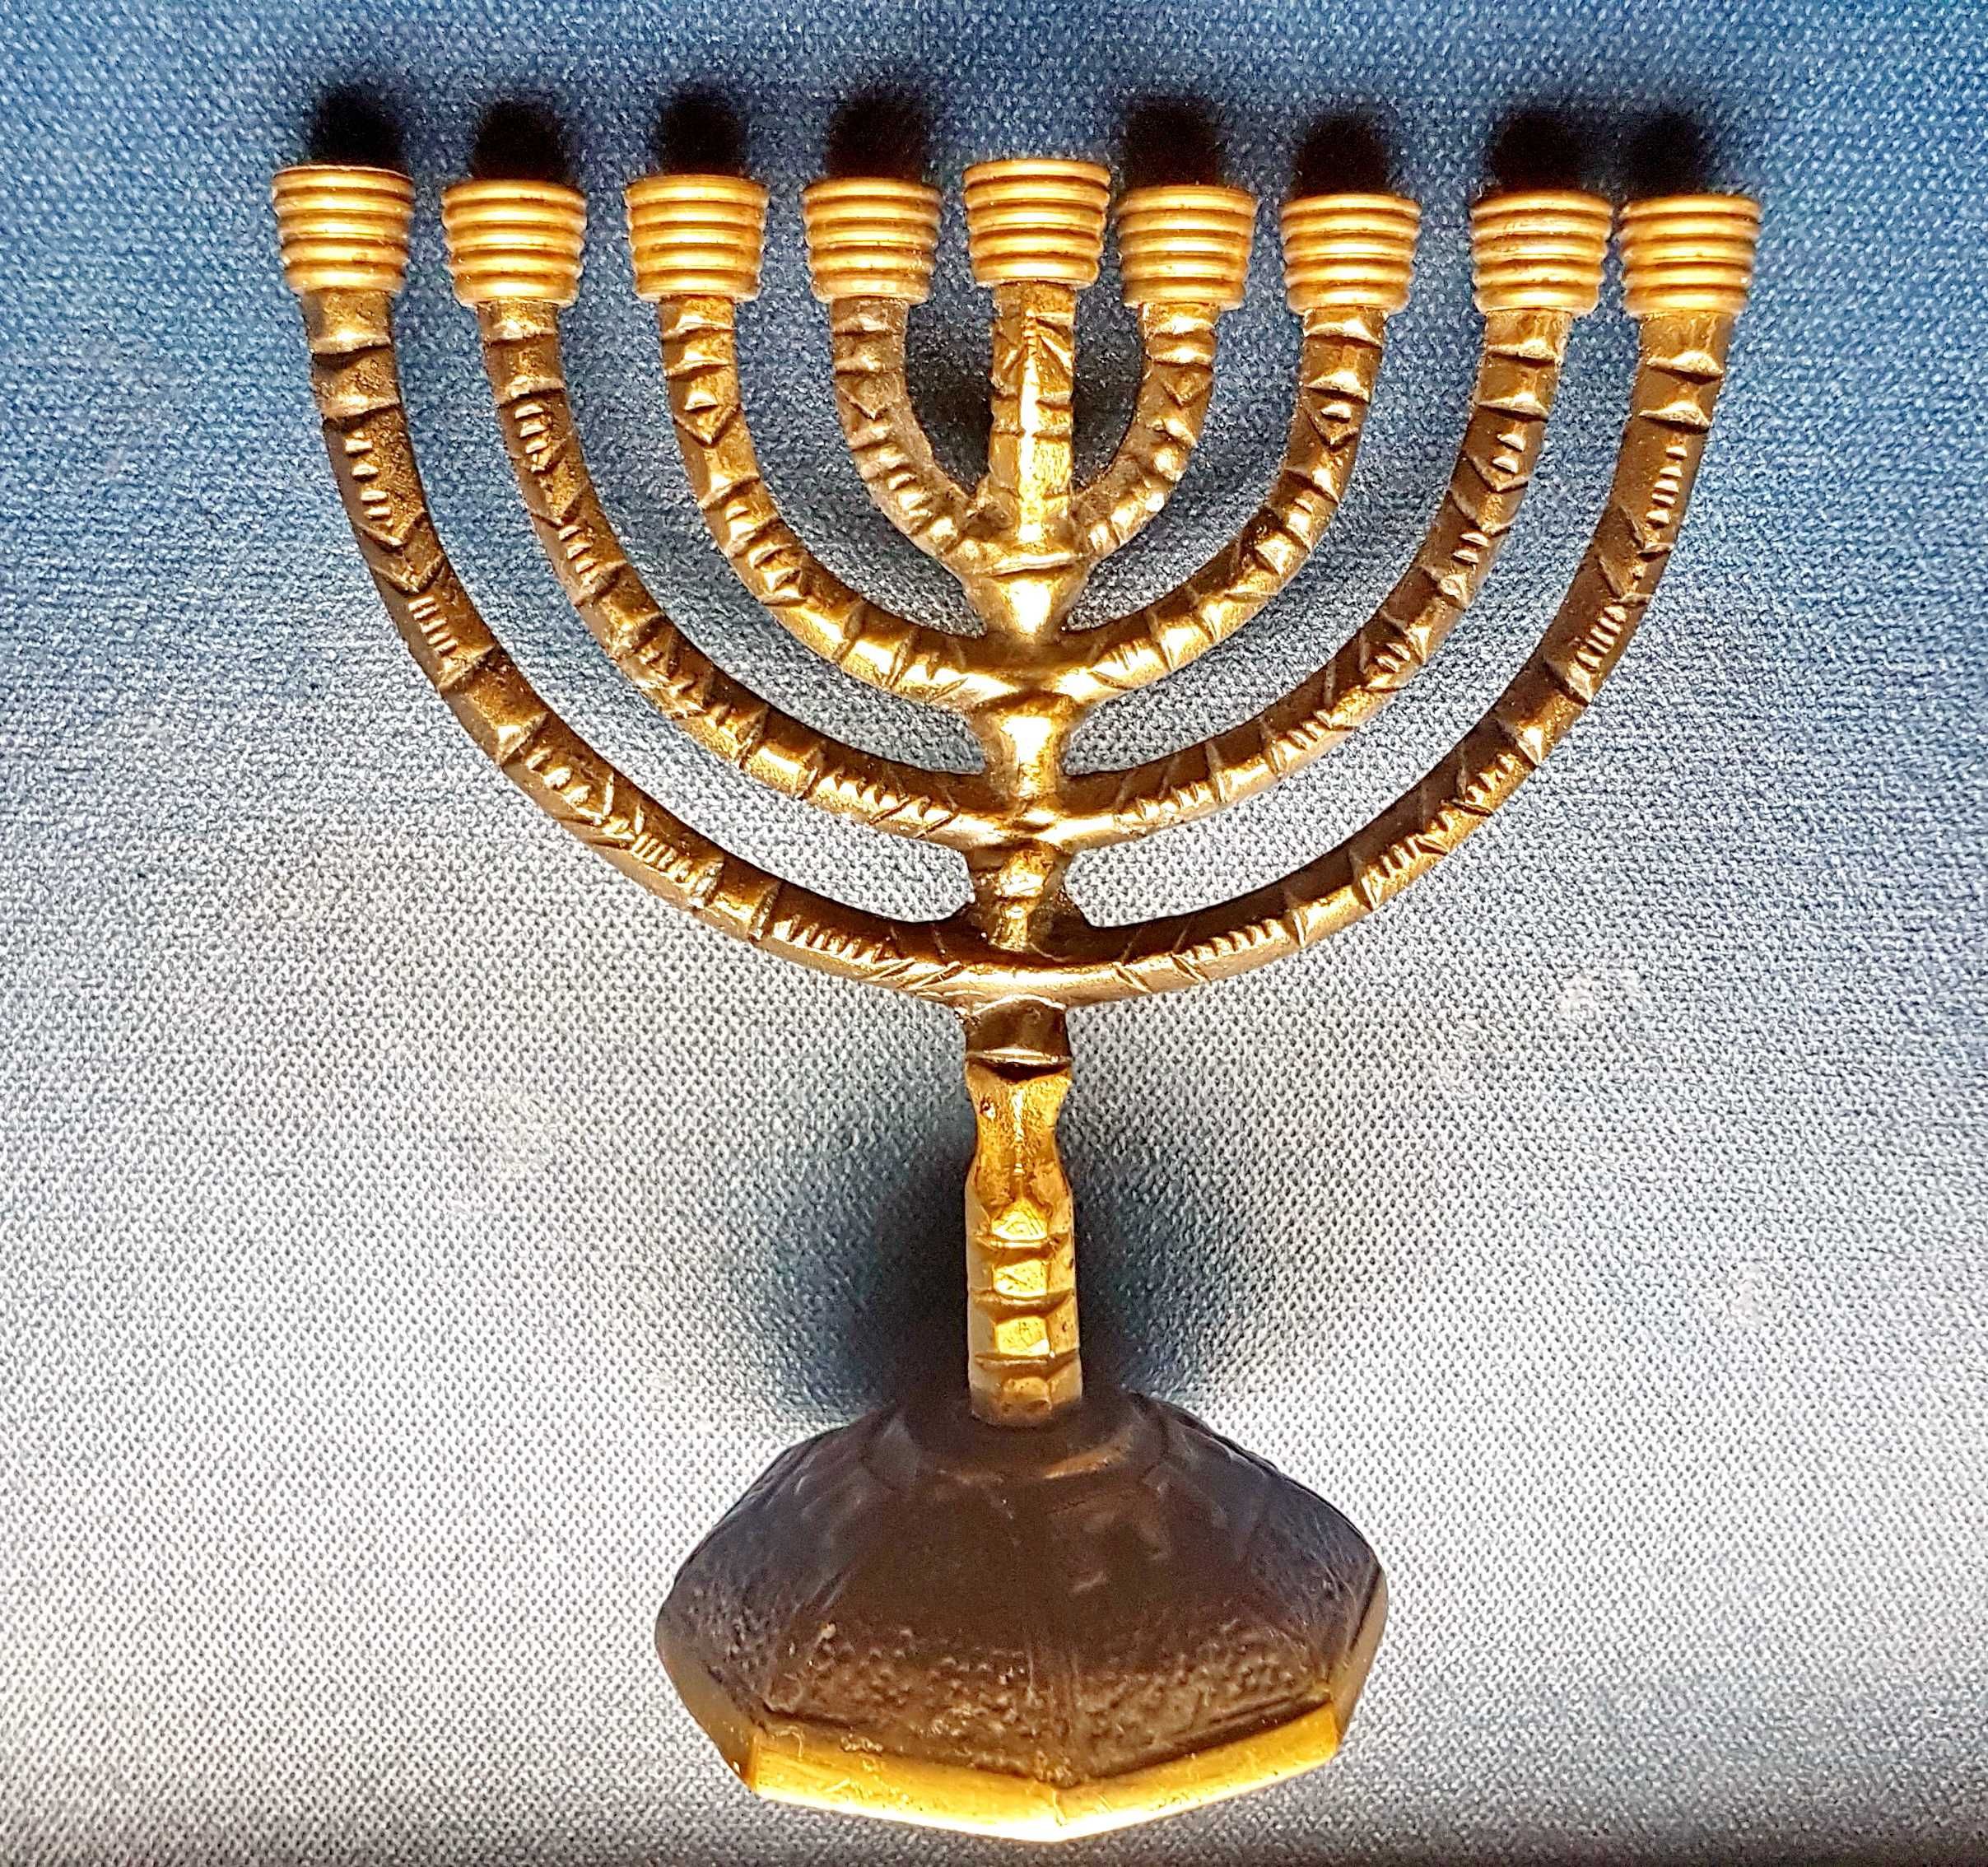 F157-MENORA MICA Israel 9 brate bronz masiv mesaj in ebraica.